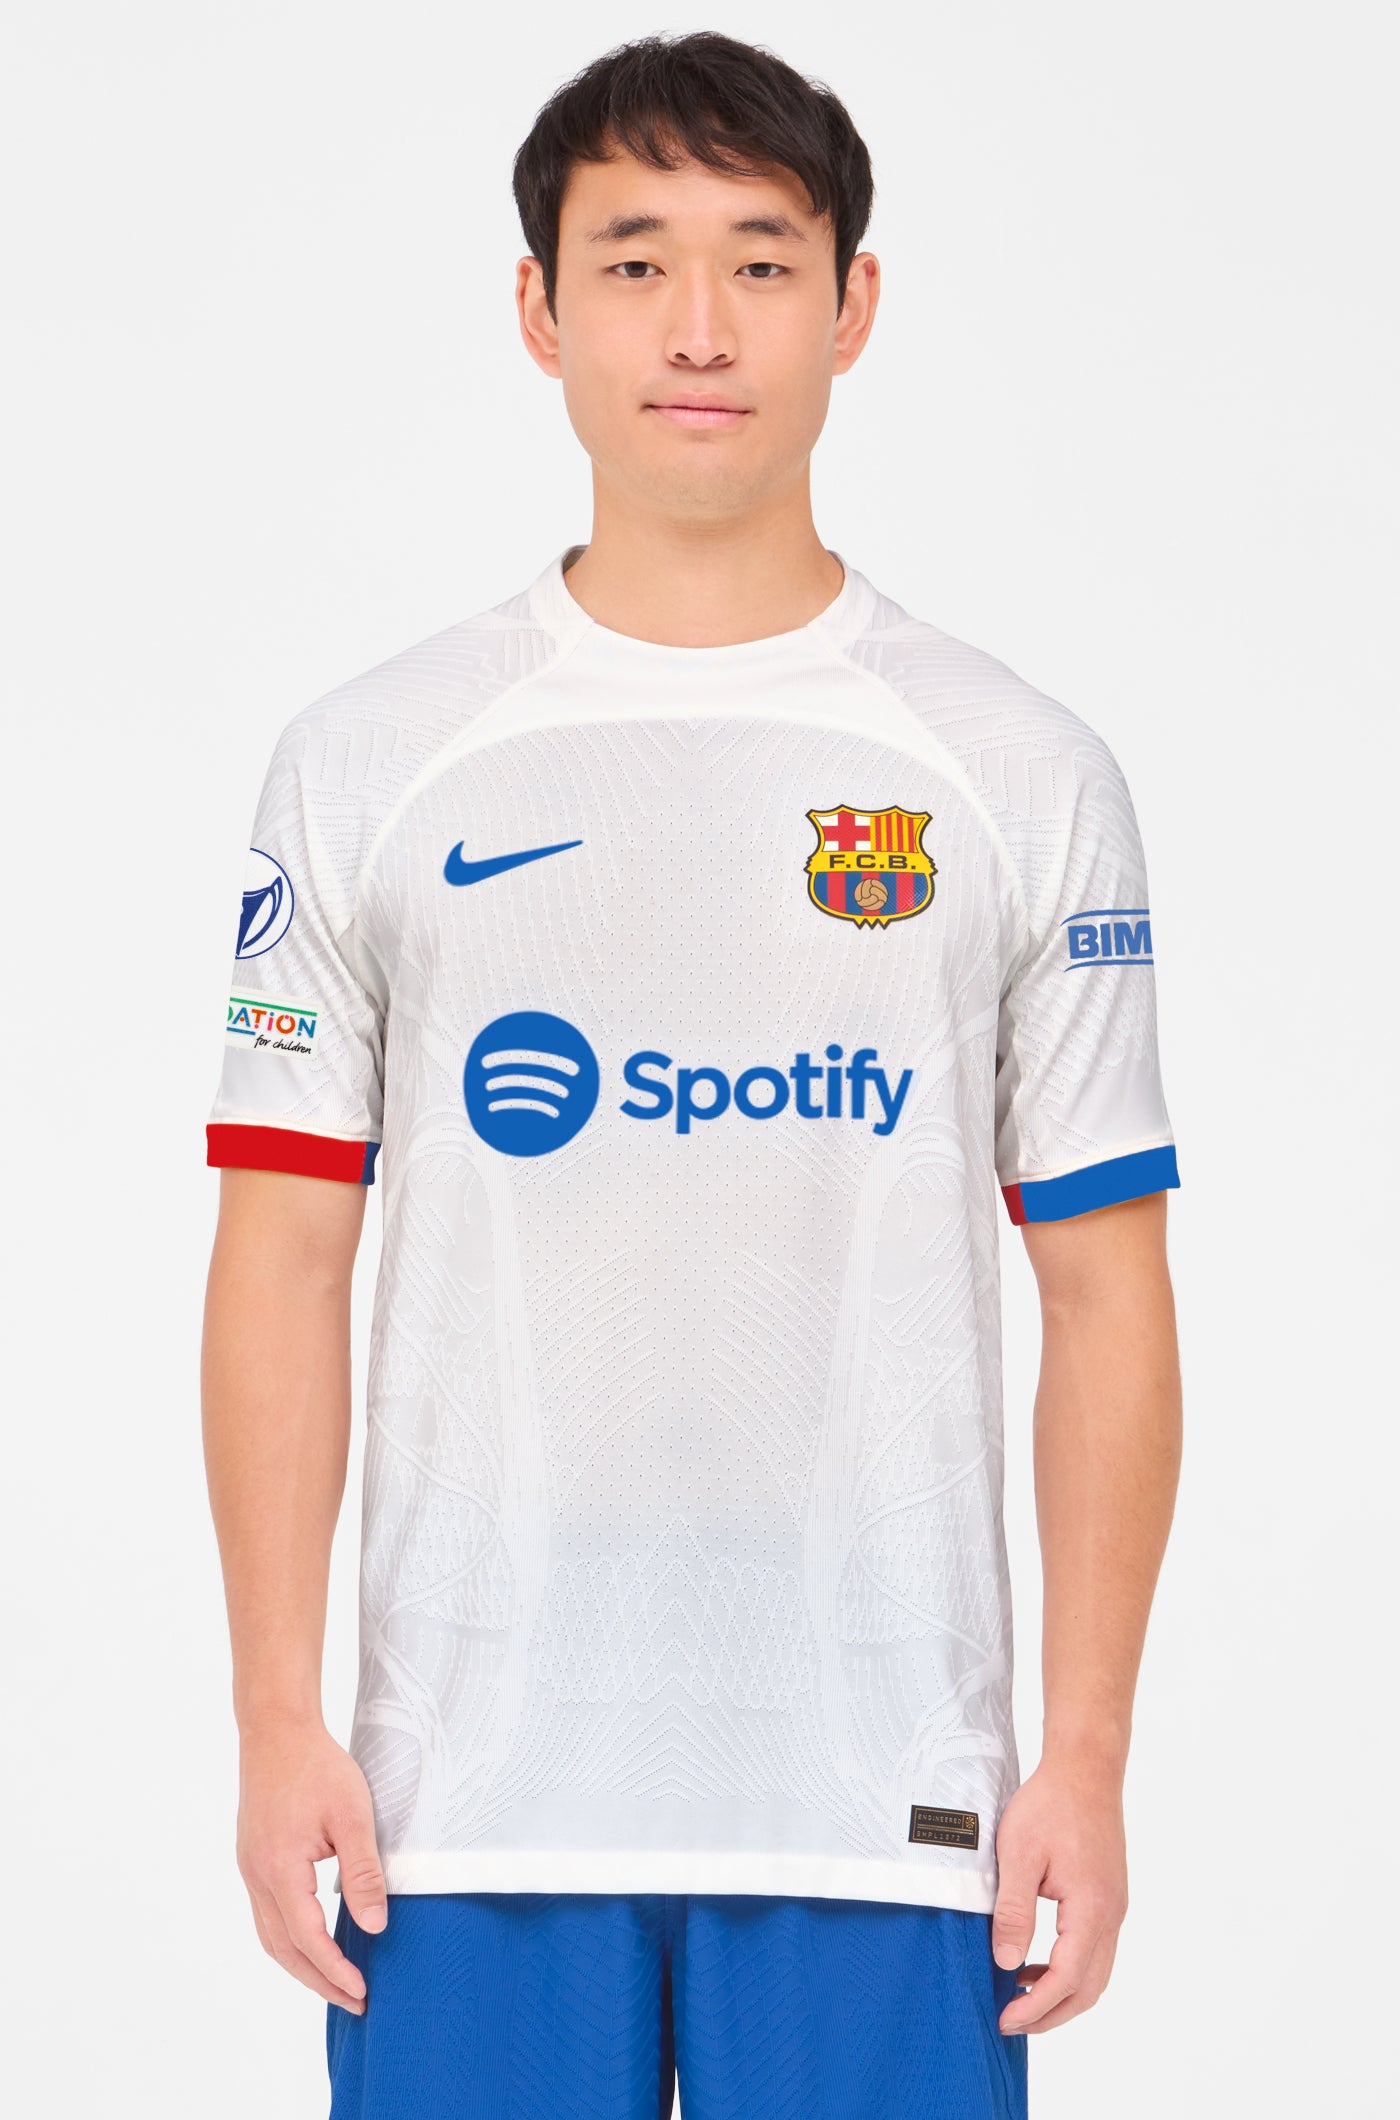 UWCL FC Barcelona away shirt 23/24 Player's Edition - MARTA